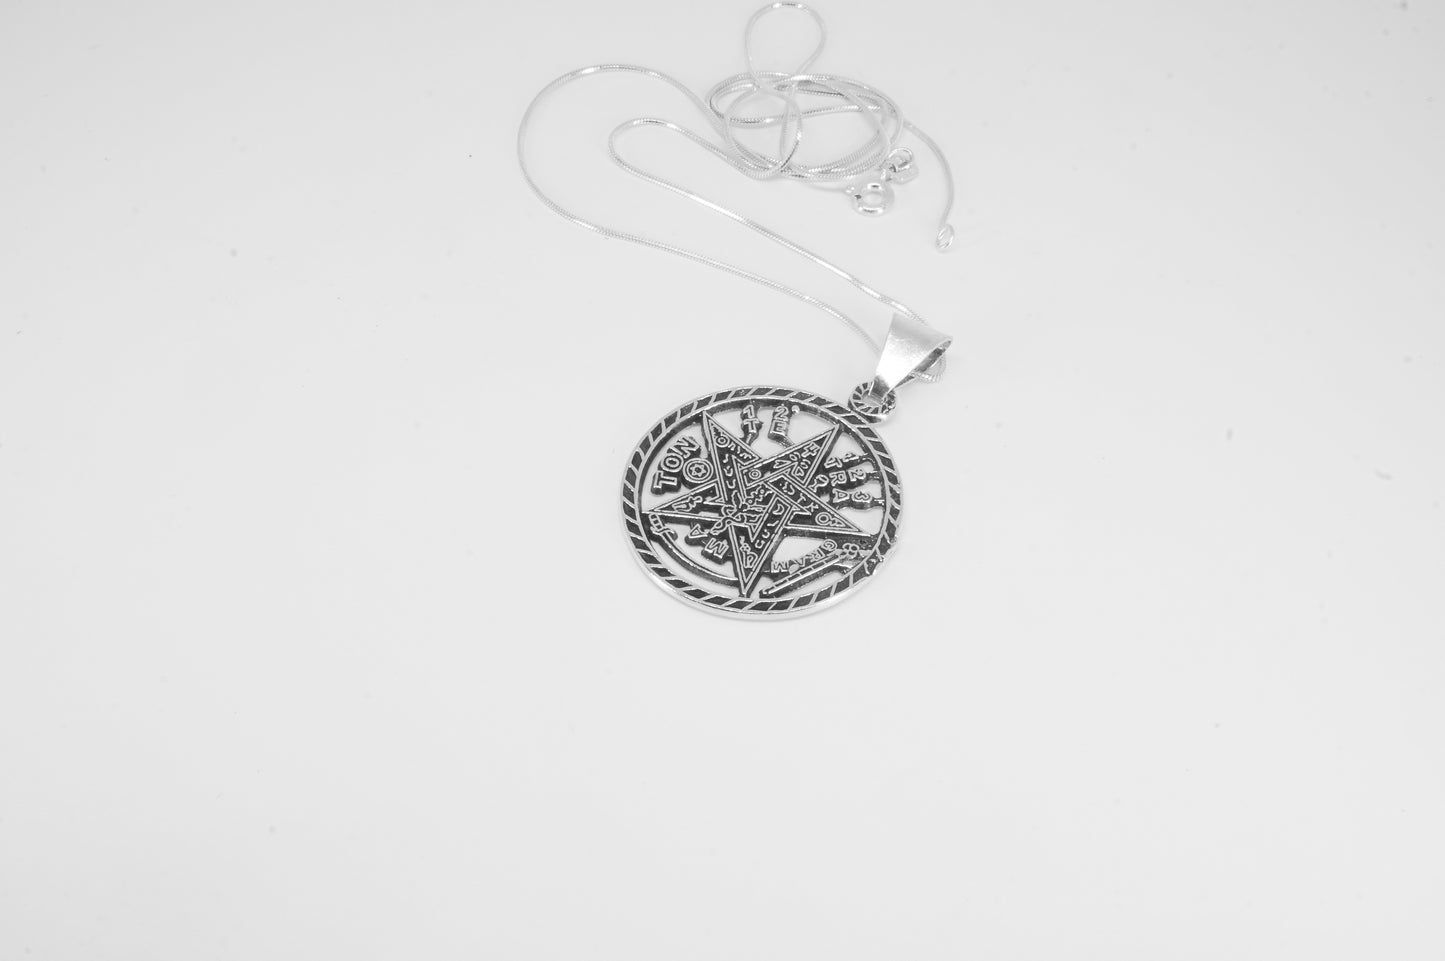 Dije de plata solida 925 Tetragramatron calado con cadena de 48cms incluida